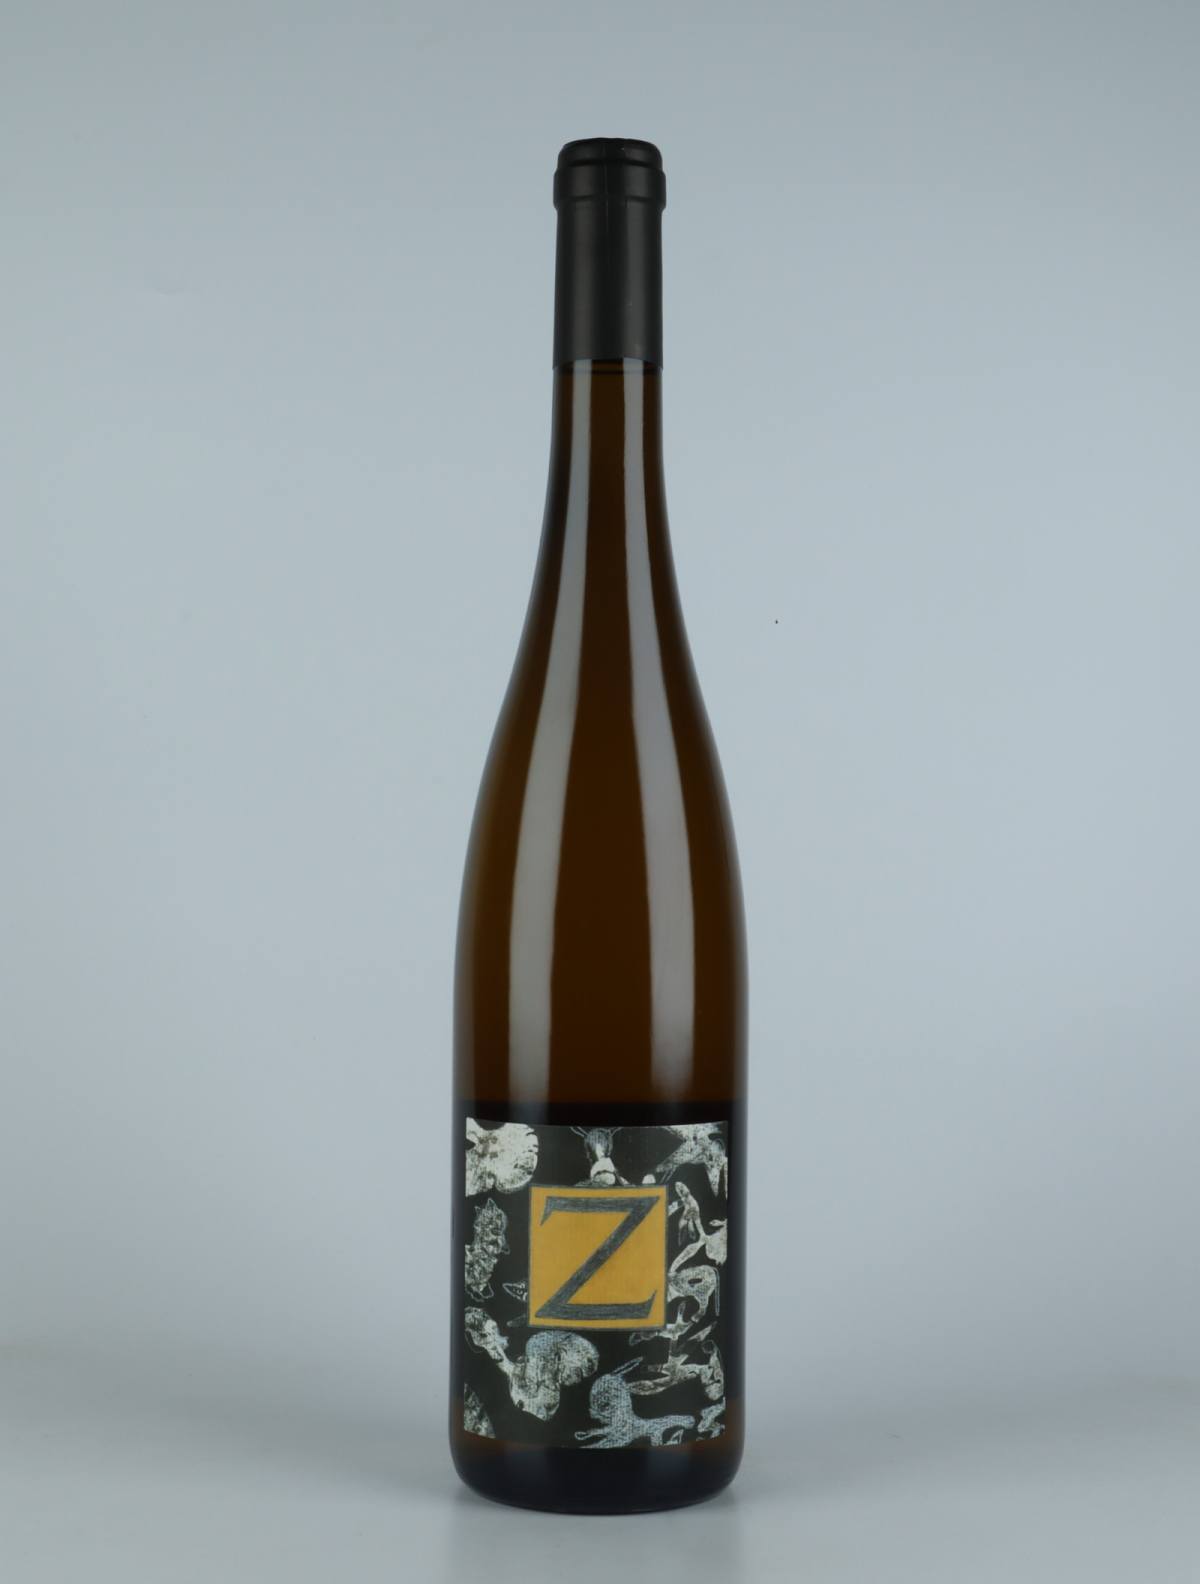 A bottle 2019 Riesling - Grand Cru Zotzenberg White wine from Domaine Rietsch, Alsace in France